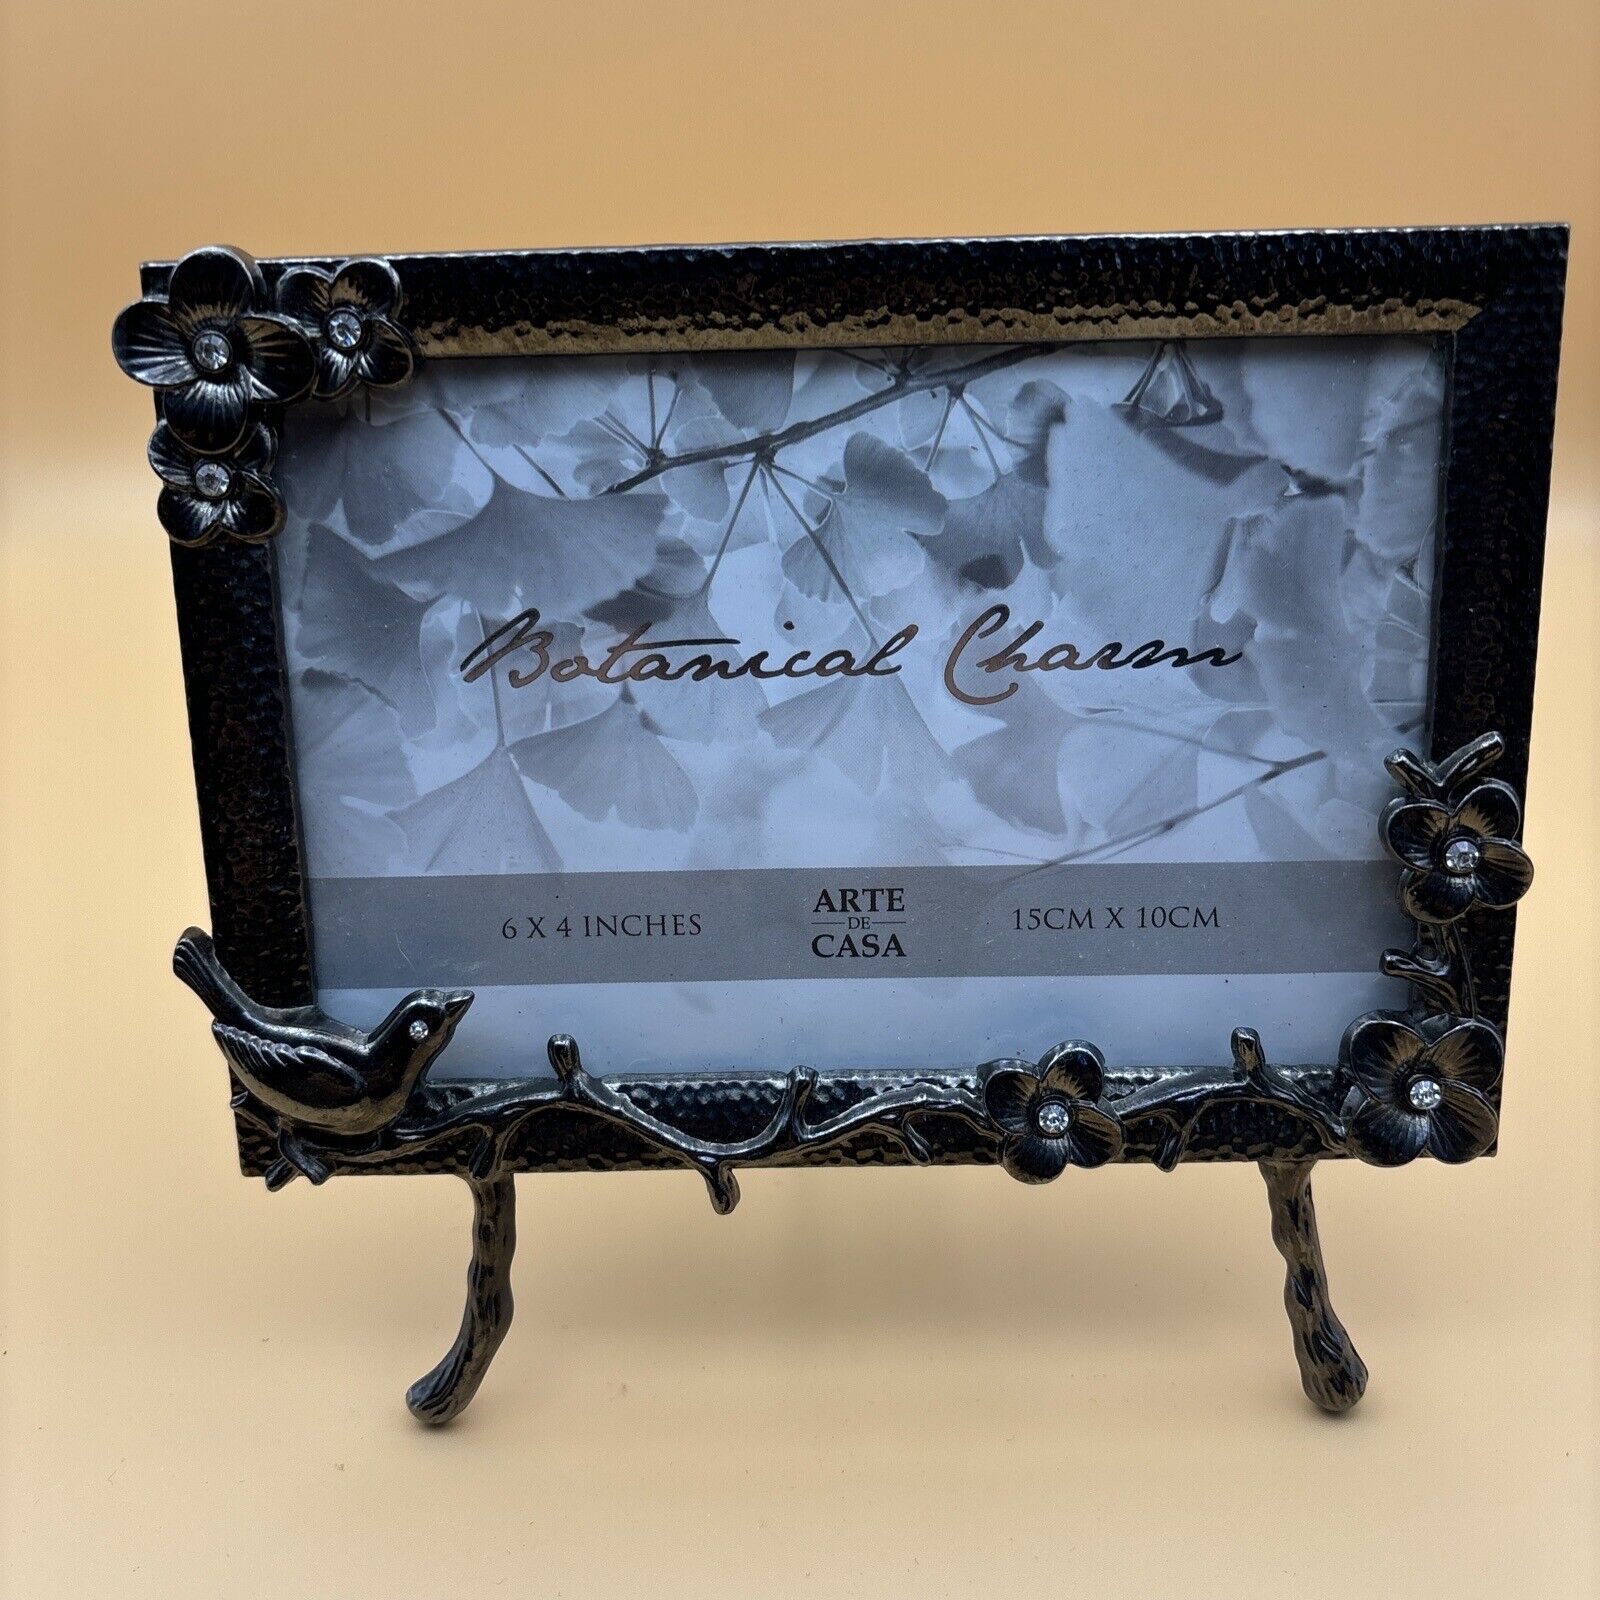 Arte De Casa Botanical Charm Silver Decorative Easel Frame 6”x4”